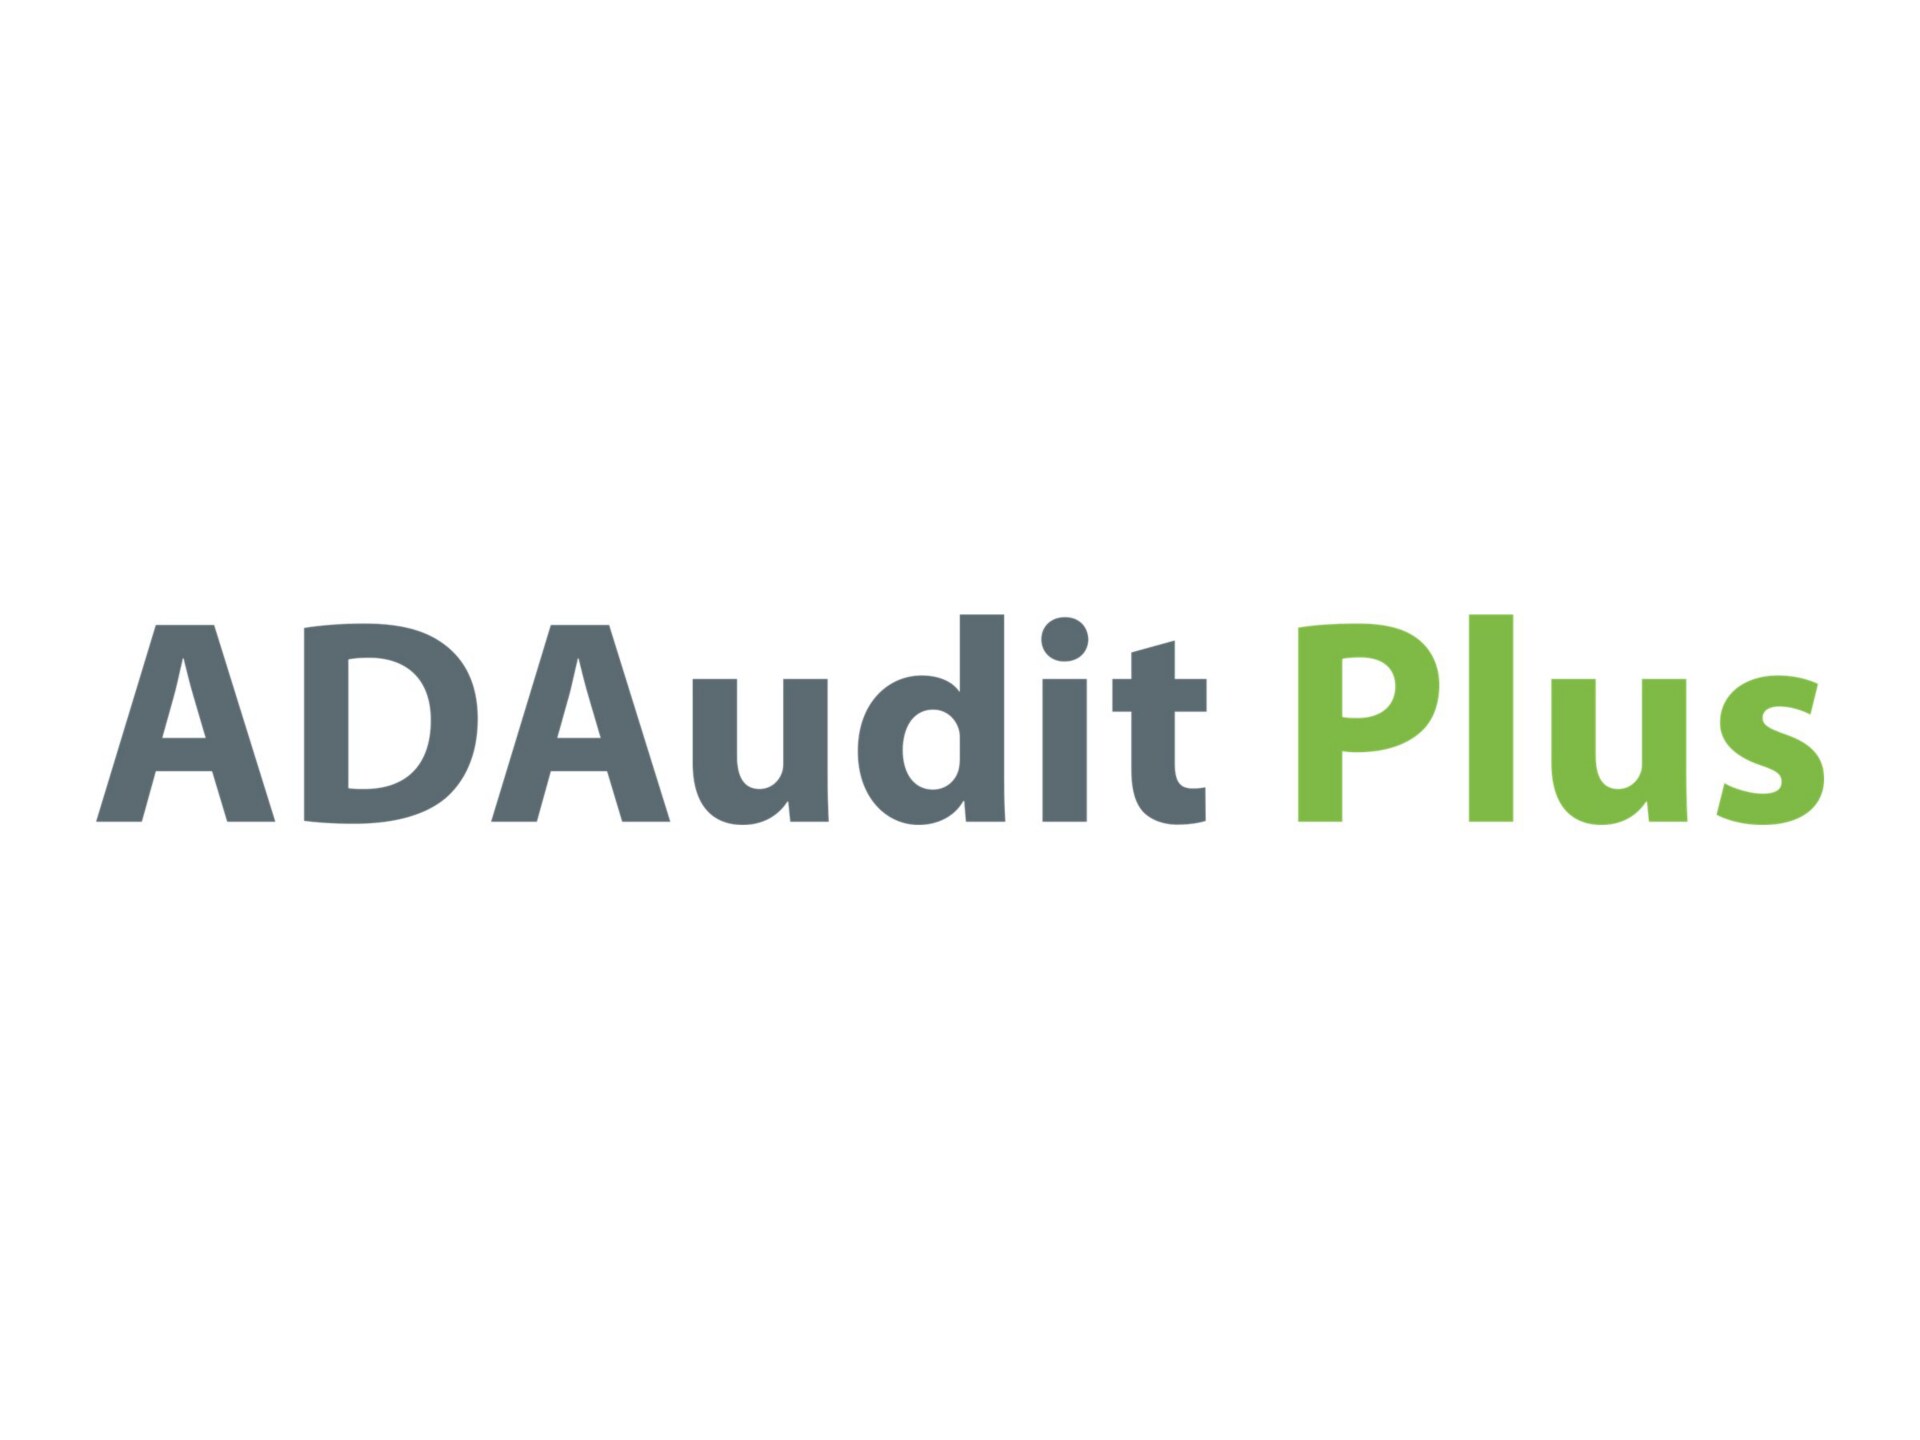 ManageEngine ADAudit Plus - subscription license (1 year) - 10 Windows serv